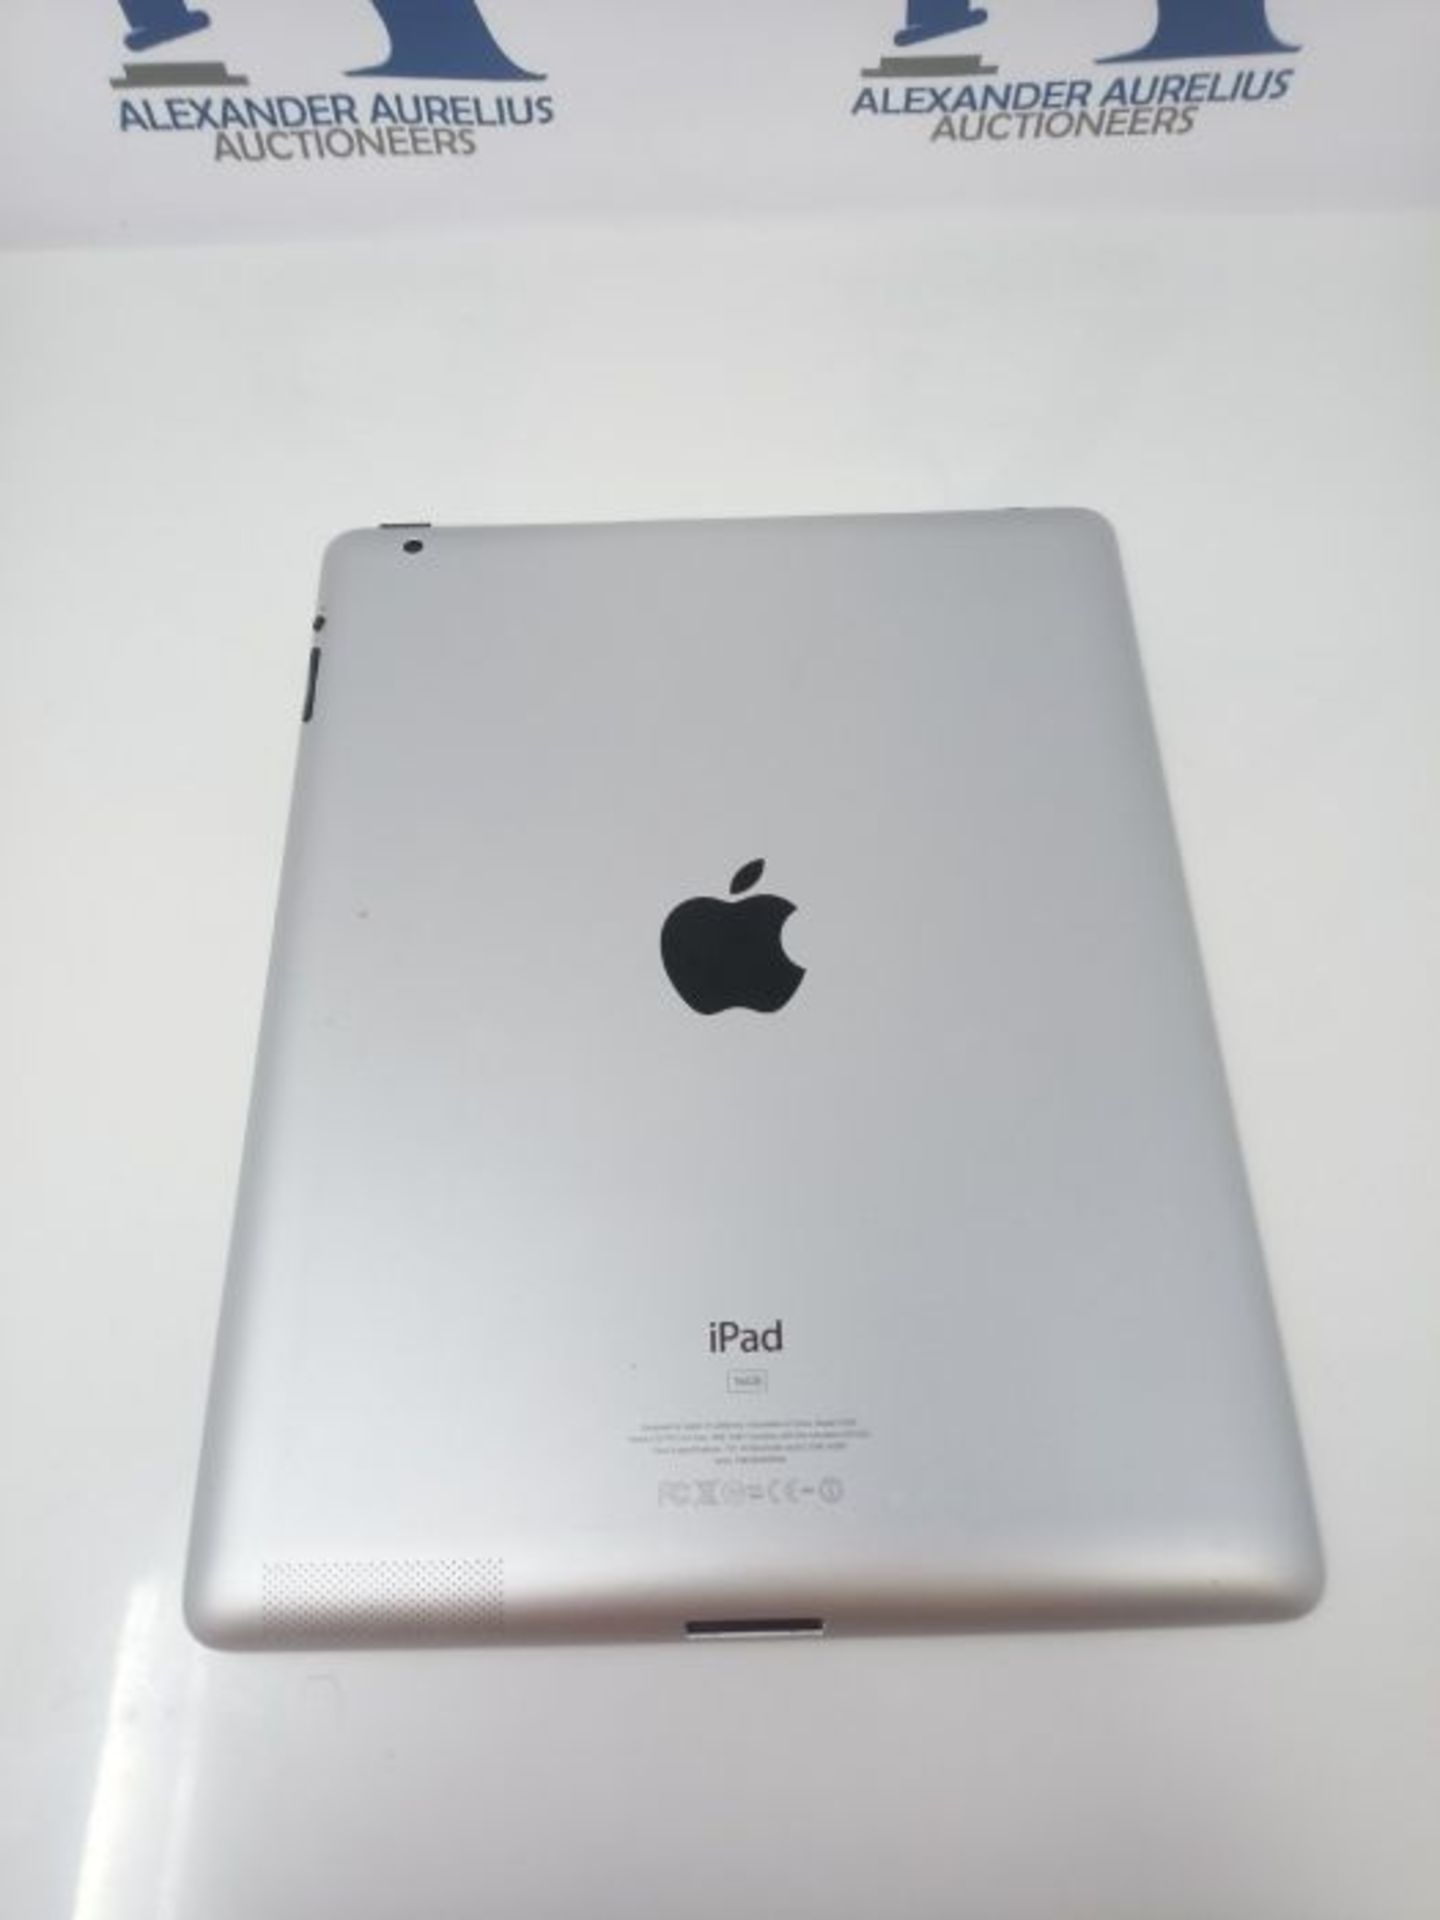 Apple A1395 MC769B/A - iPad - Silver - 16GB - Image 6 of 6